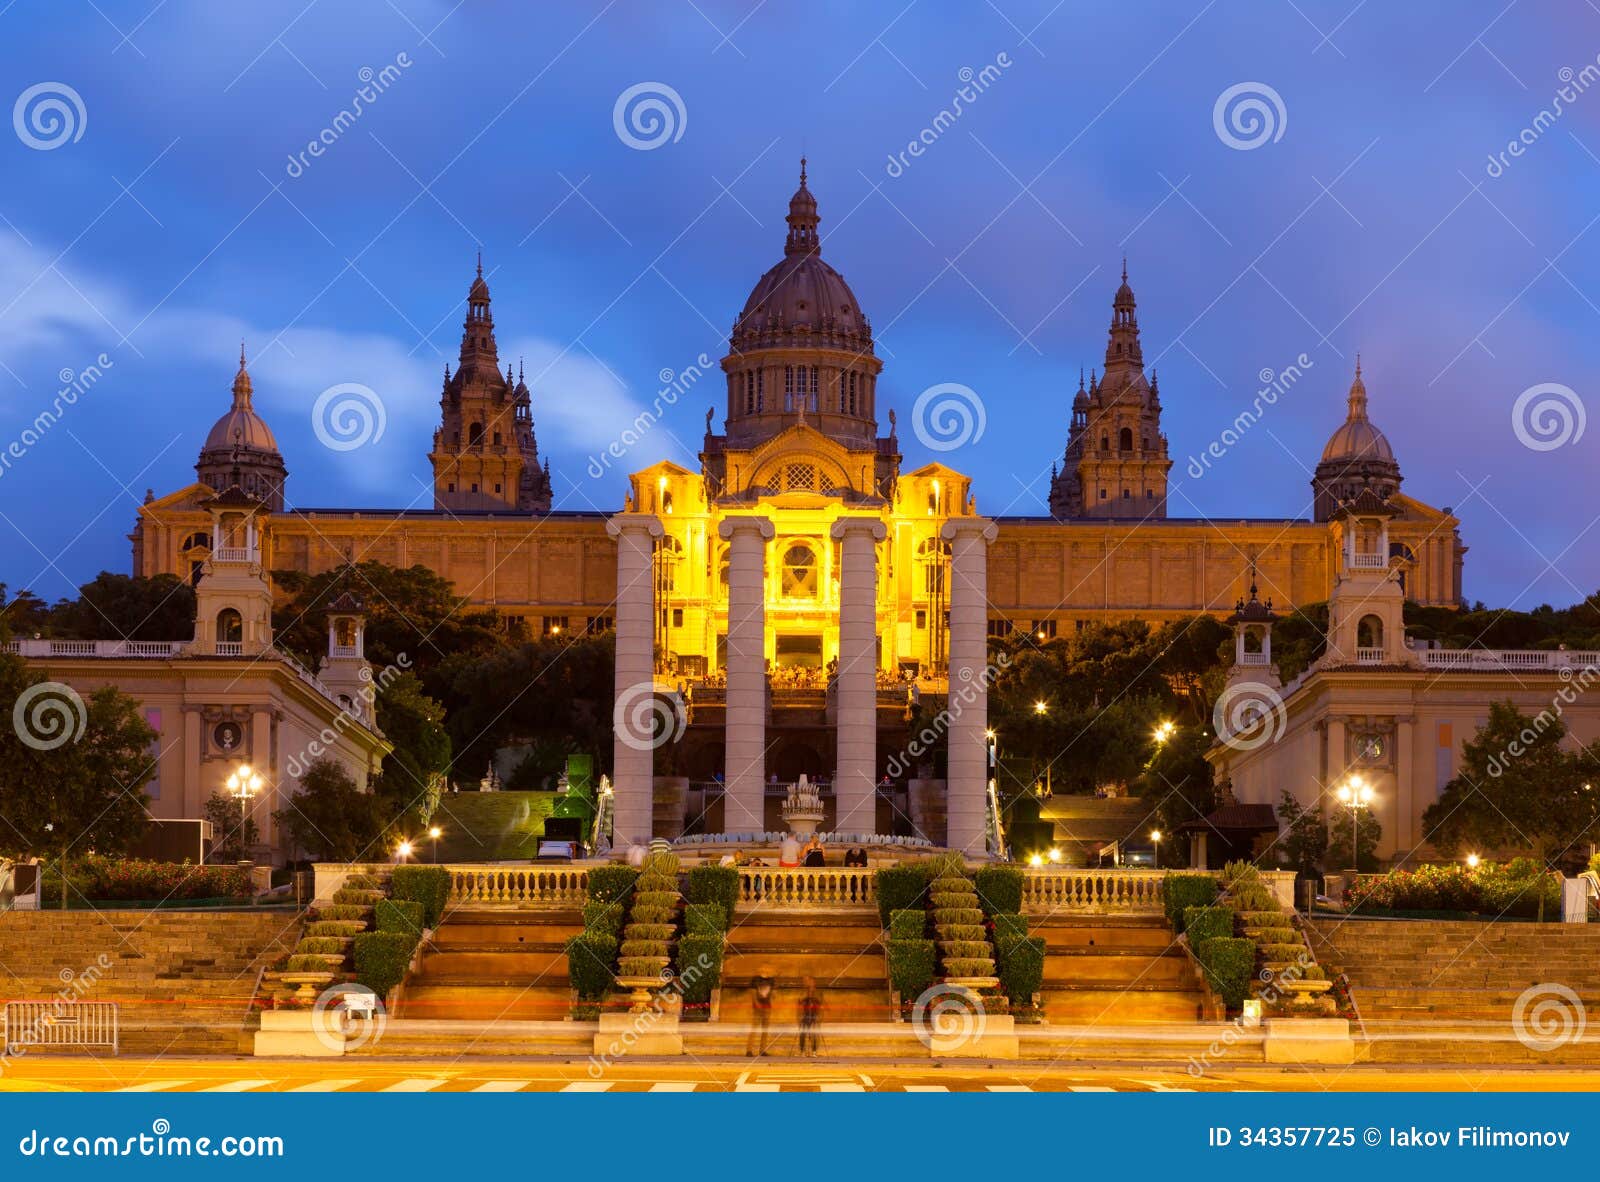 Palau Nacional De Montjuic In Barcelona, Spain Stock Image 